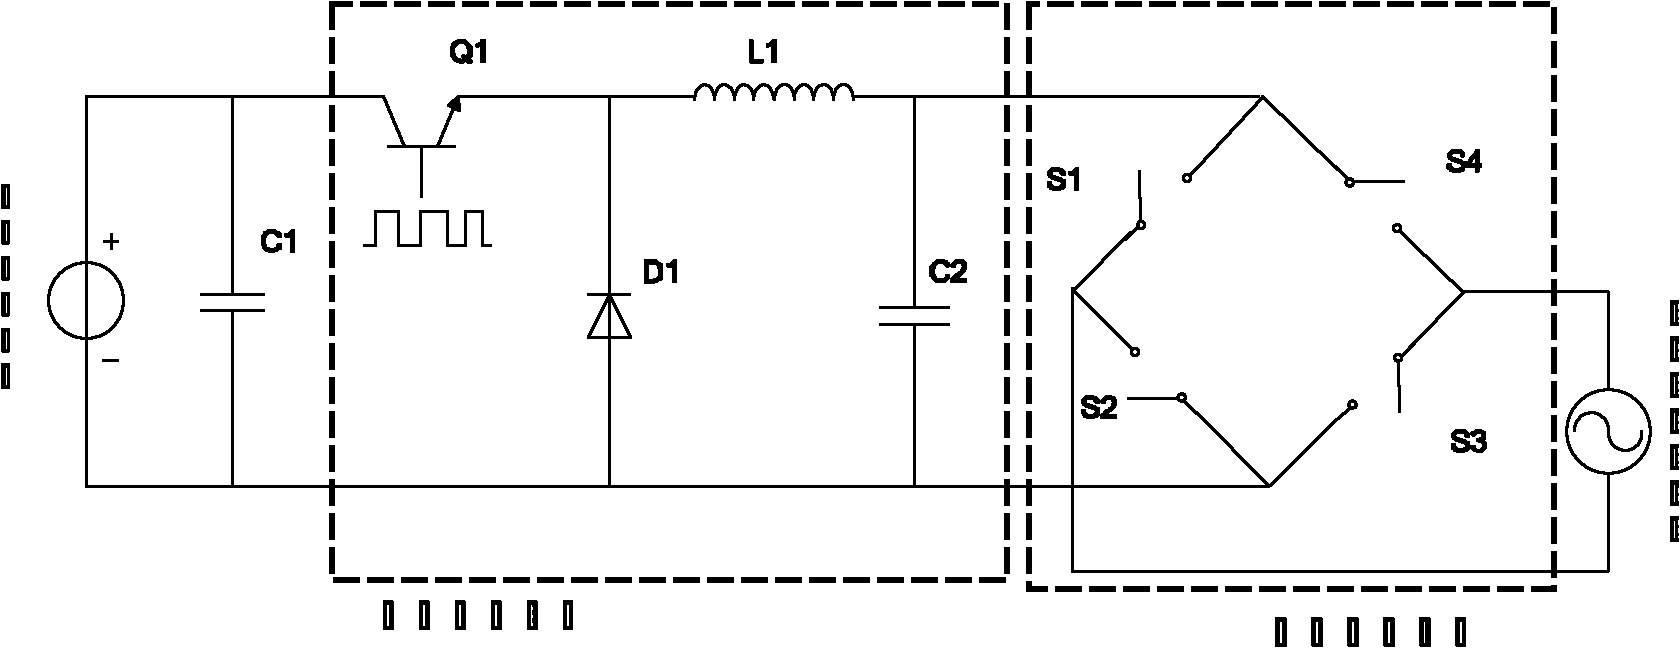 DC (direct current)/AC (alternating current) inverter circuit